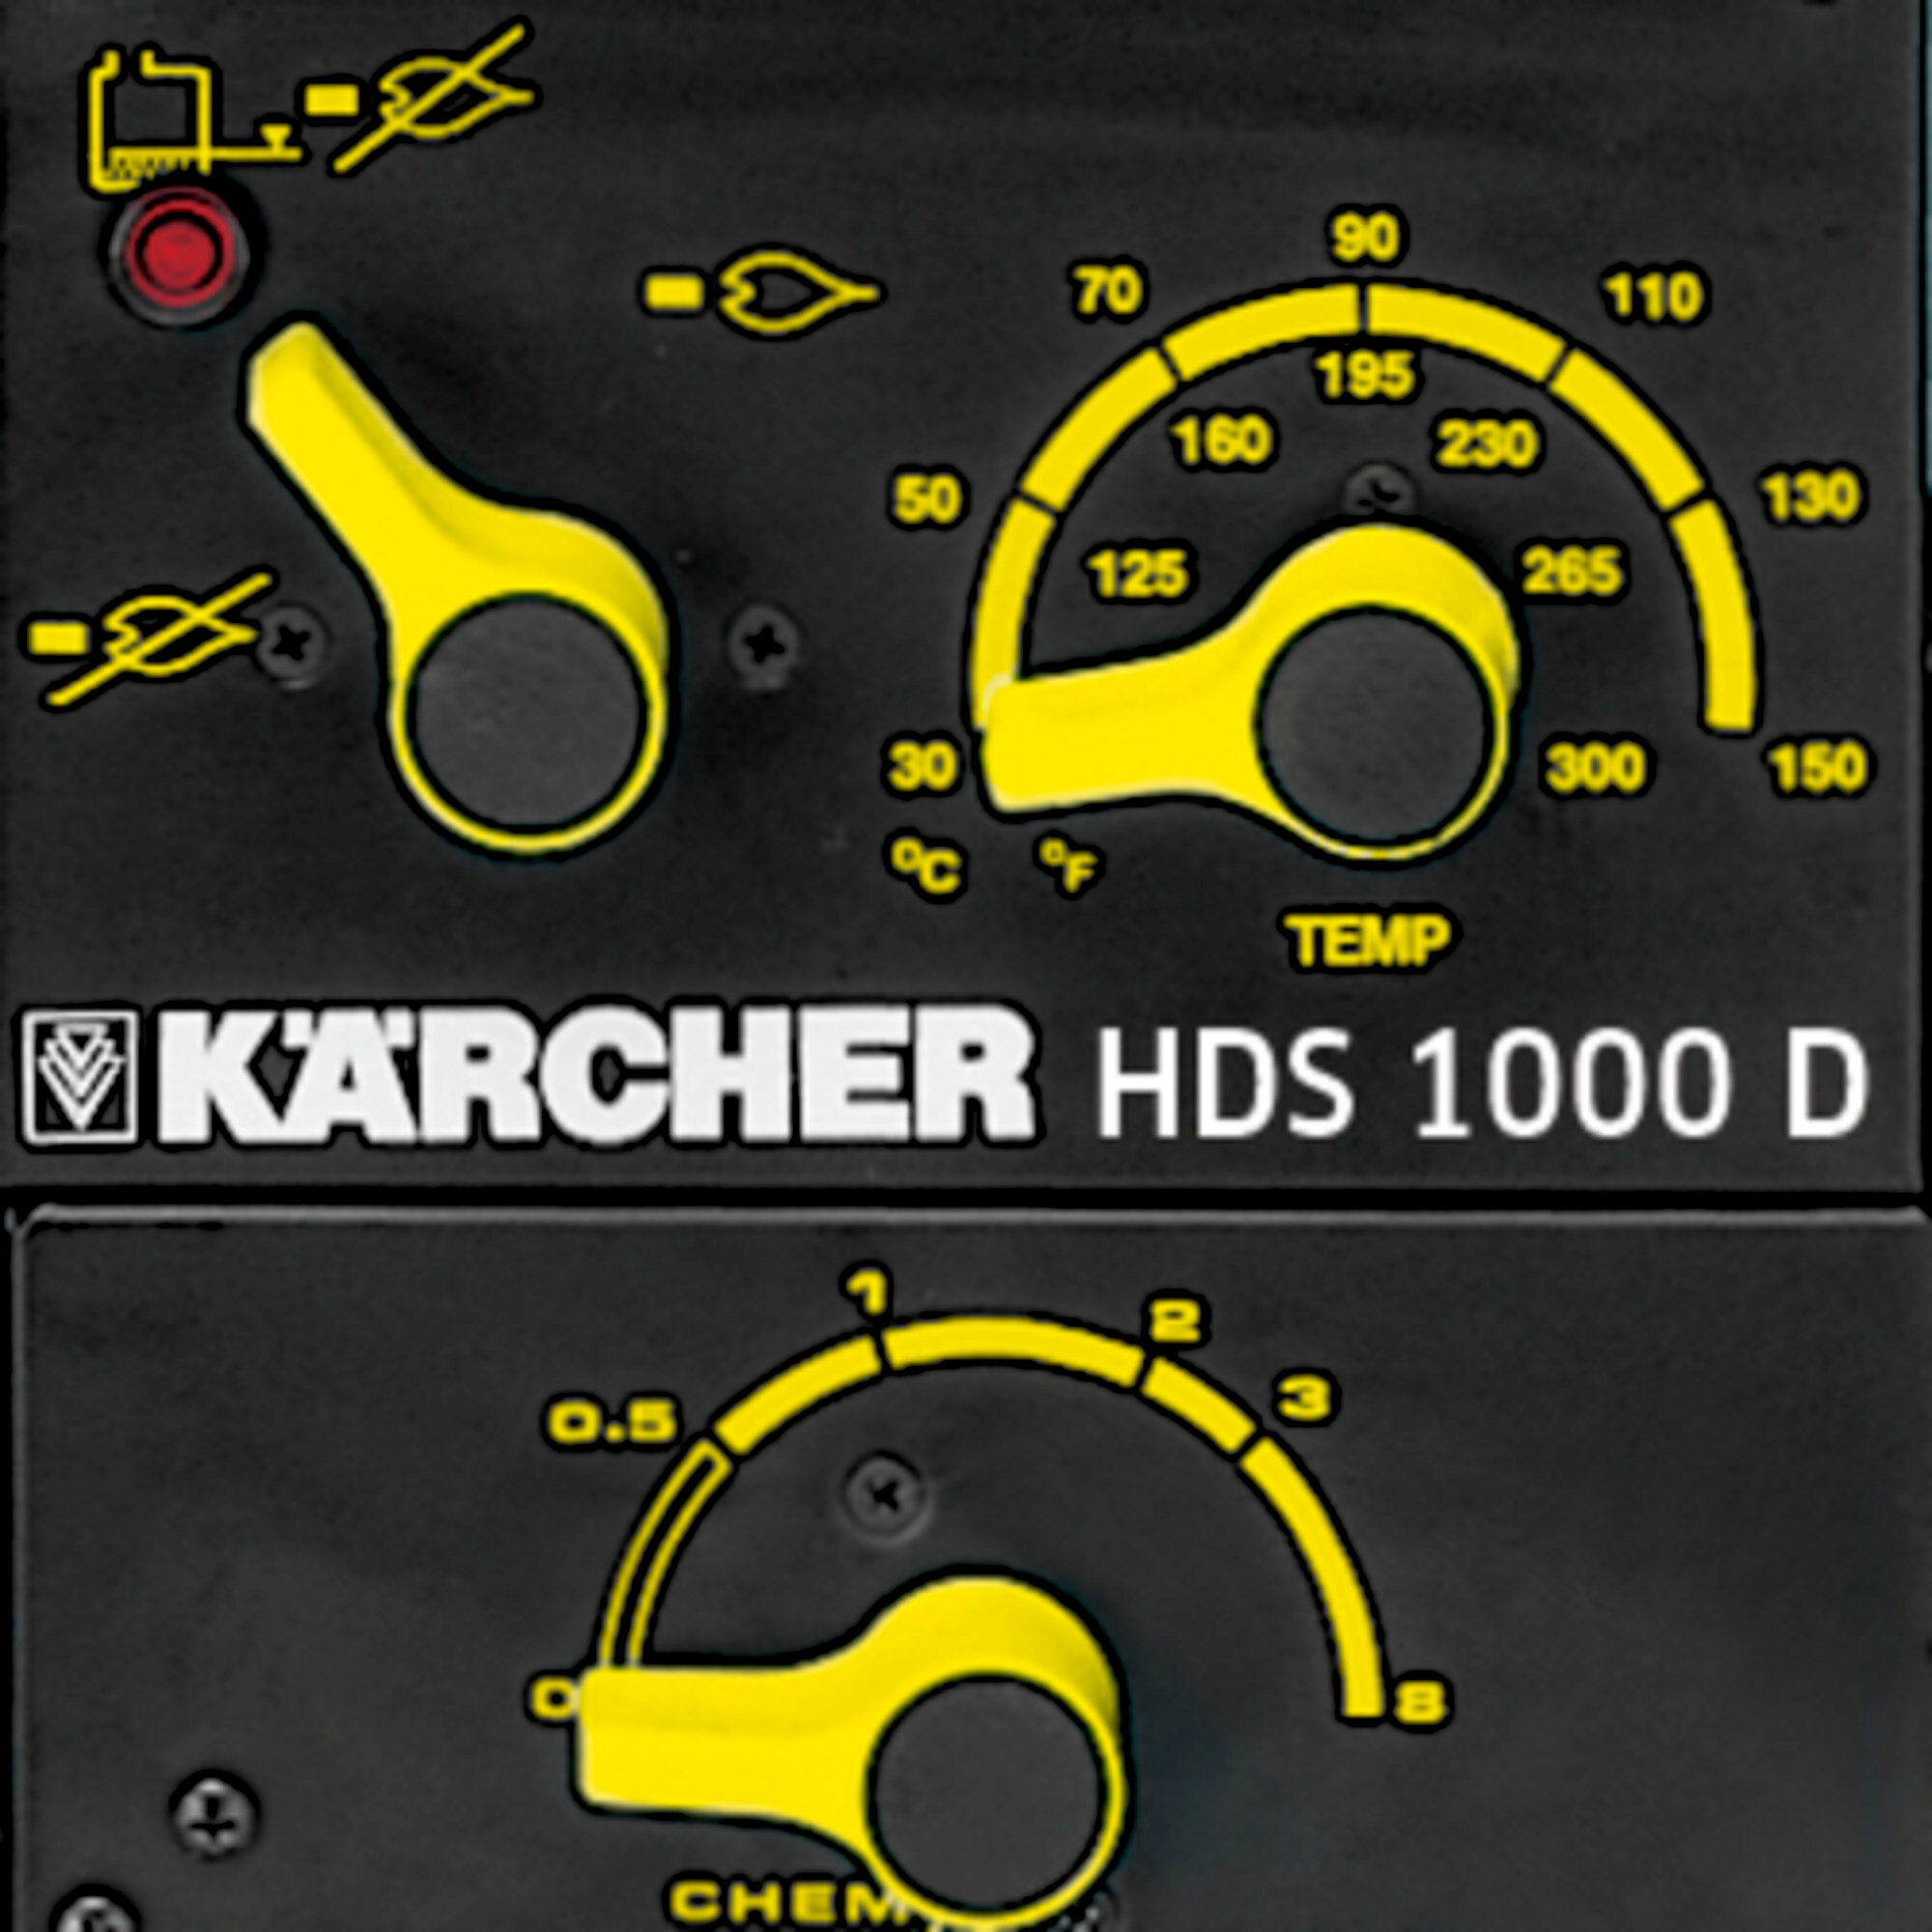 High pressure washer HDS 1000 De: Optimum ease of use